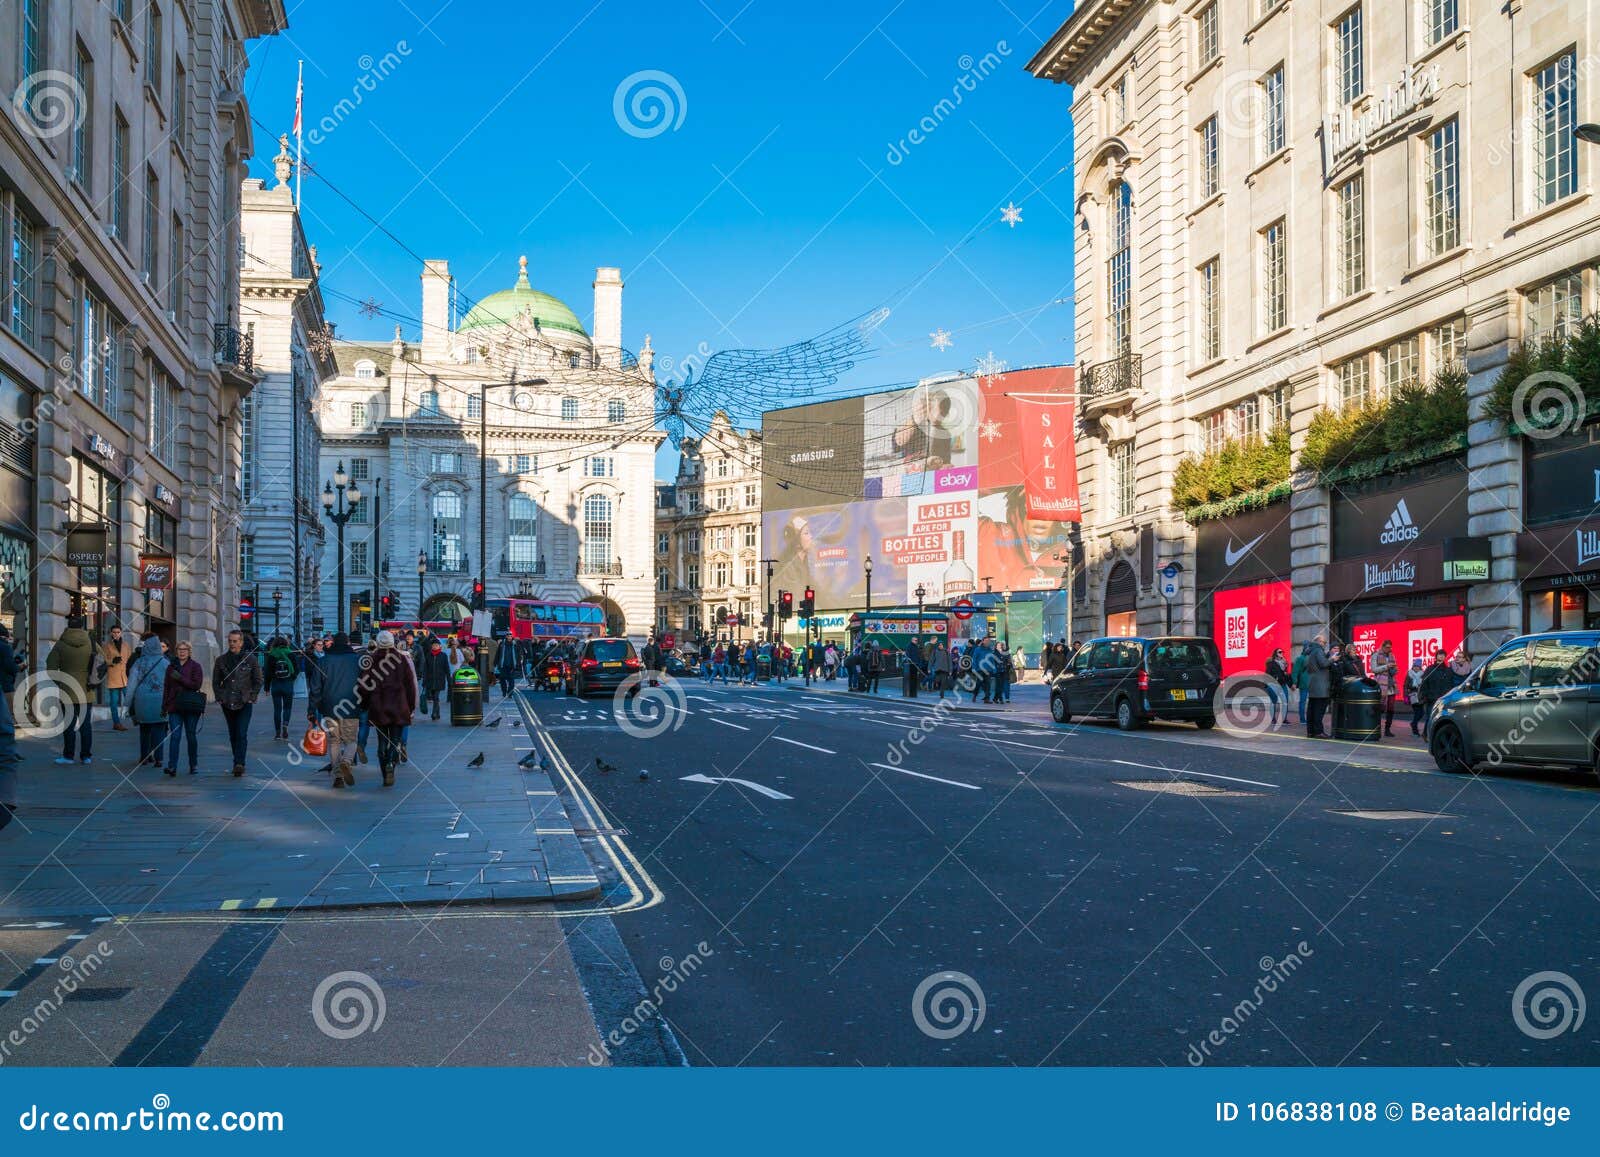 Regent Saint James`s, London Editorial Stock Photo - Image of destination, outdoor: 106838108